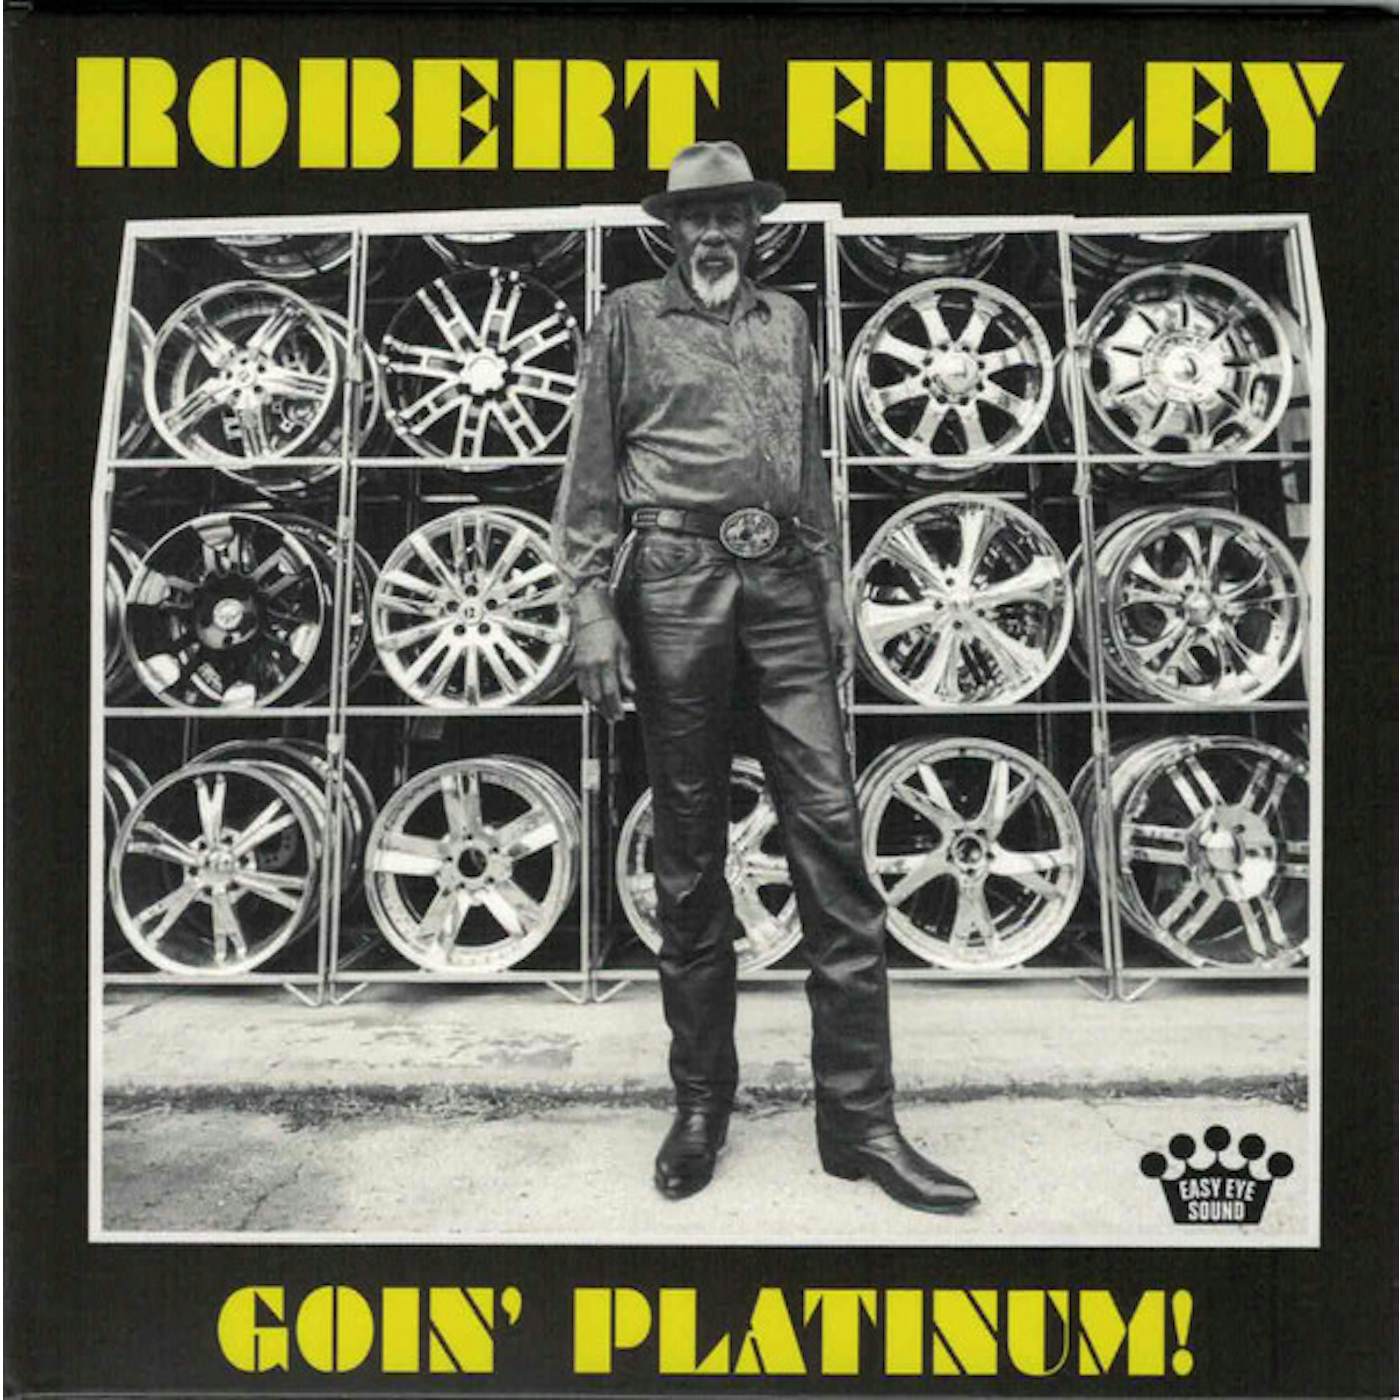 Robert Finley GOIN PLATINUM Vinyl Record